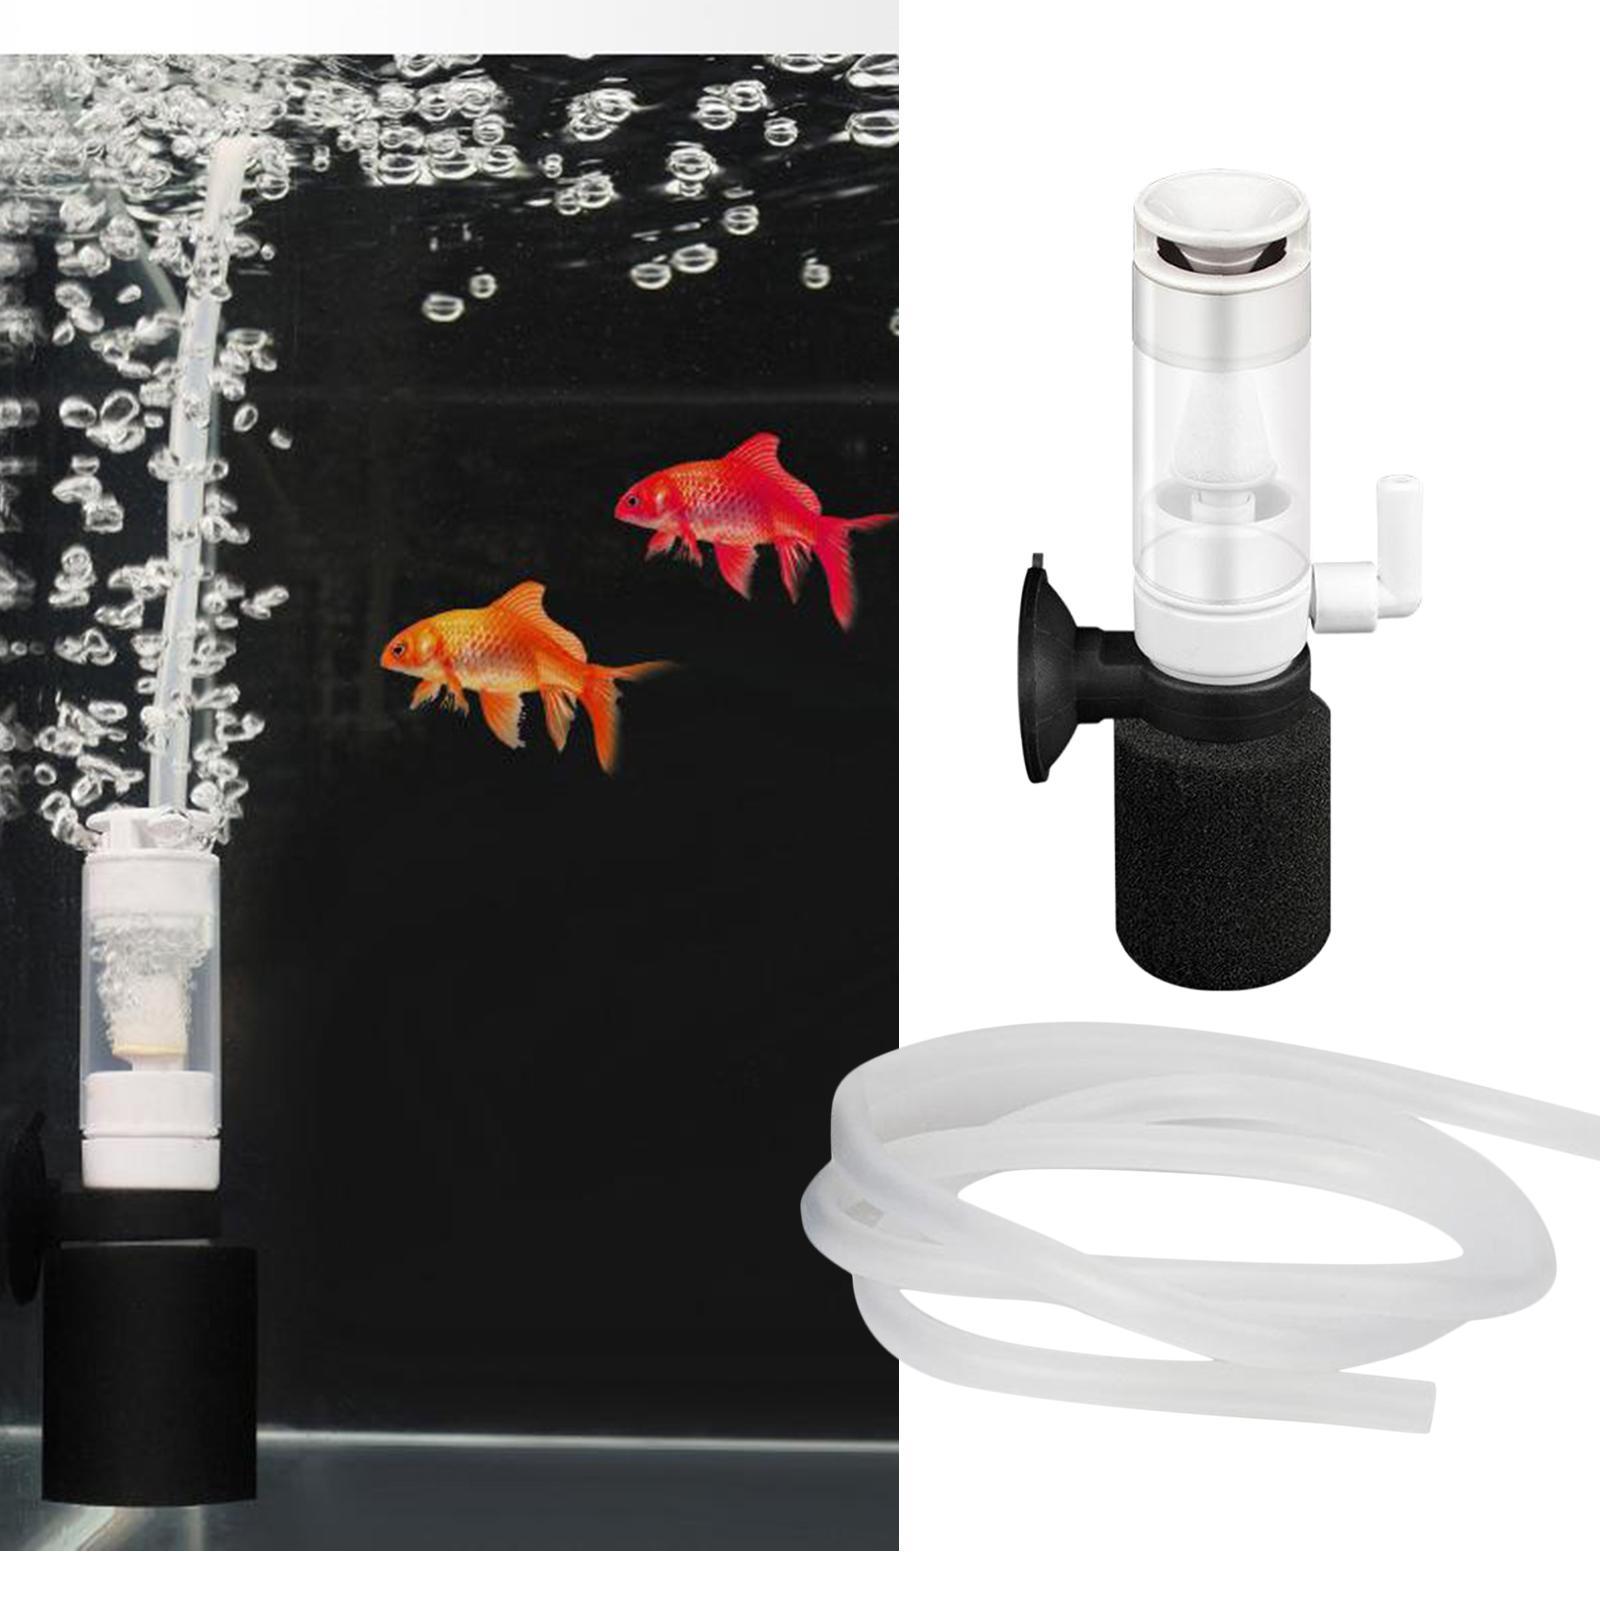 2X 1 Set Bubble Mini Sponge Filter Water Cleaner for Small Water Tank Aquarium